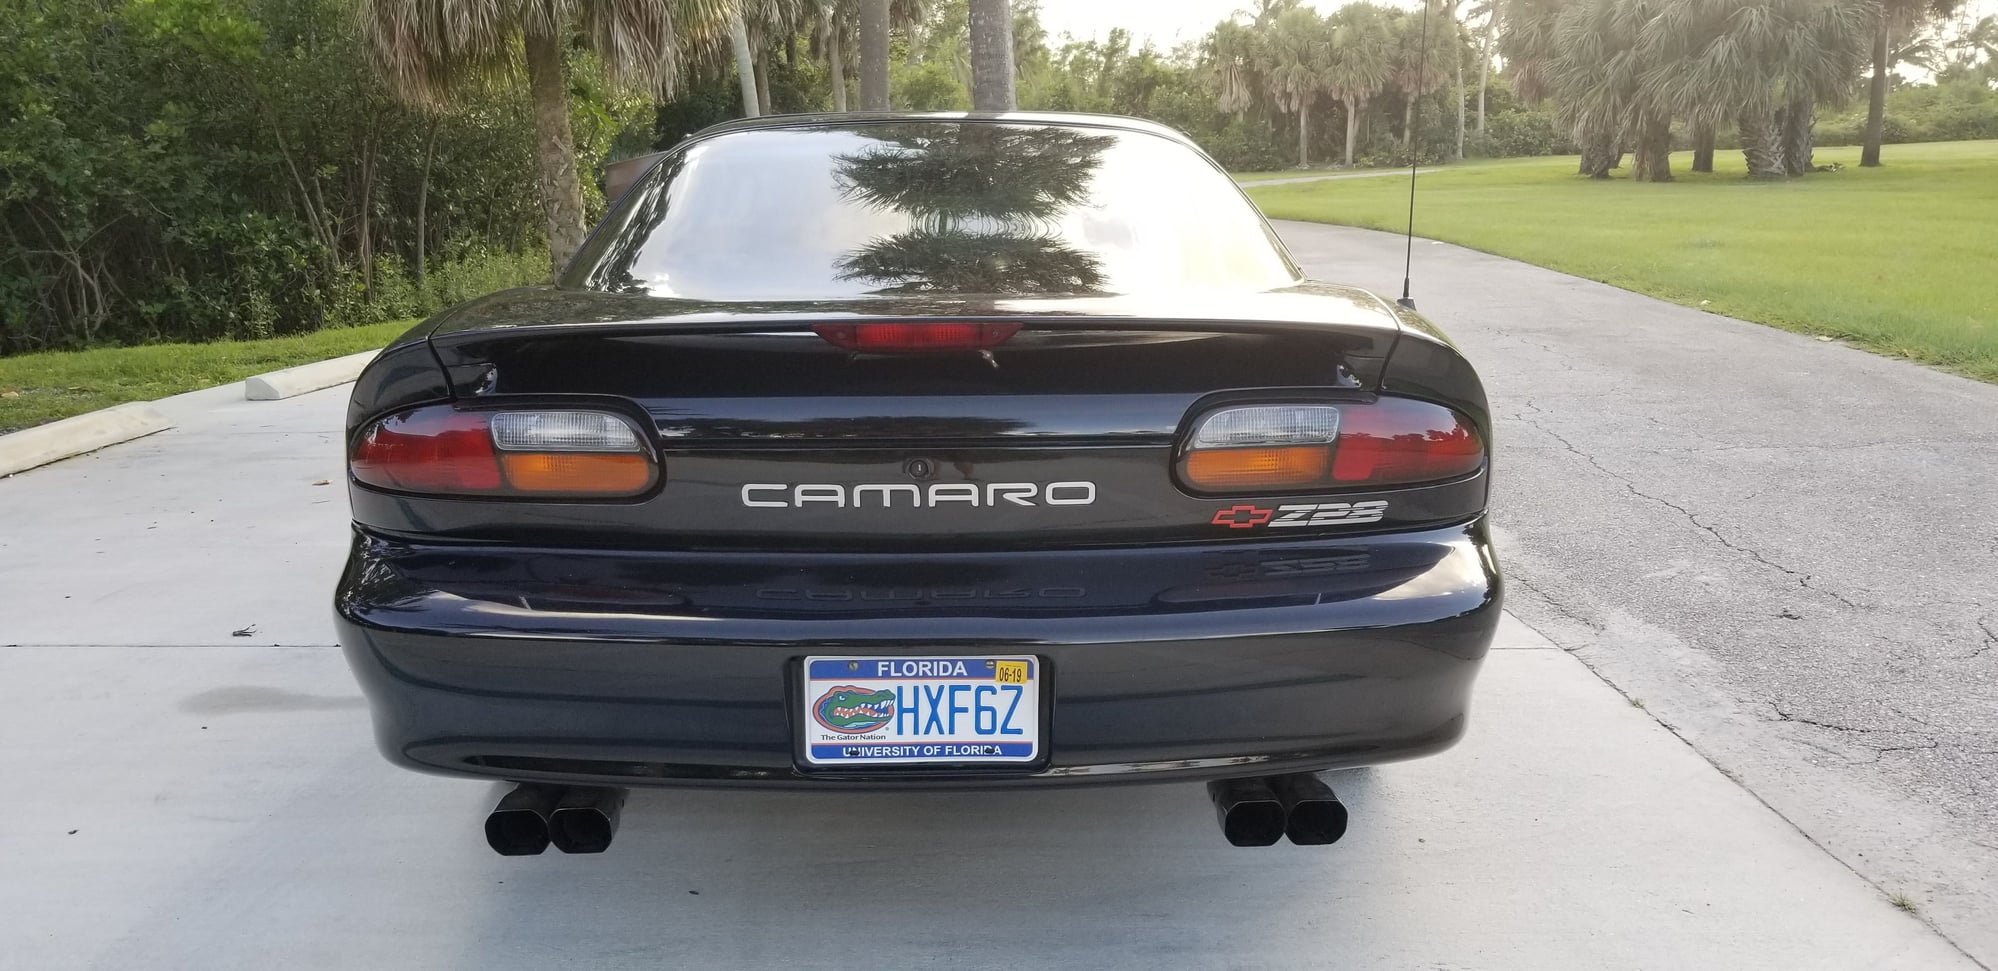 1999 Chevrolet Camaro - 1999 M6 Z28 93k Miles - Used - VIN 2G1FP22G0X2111368 - 93,000 Miles - 8 cyl - 2WD - Manual - Coupe - Black - Jupiter, FL 33458, United States